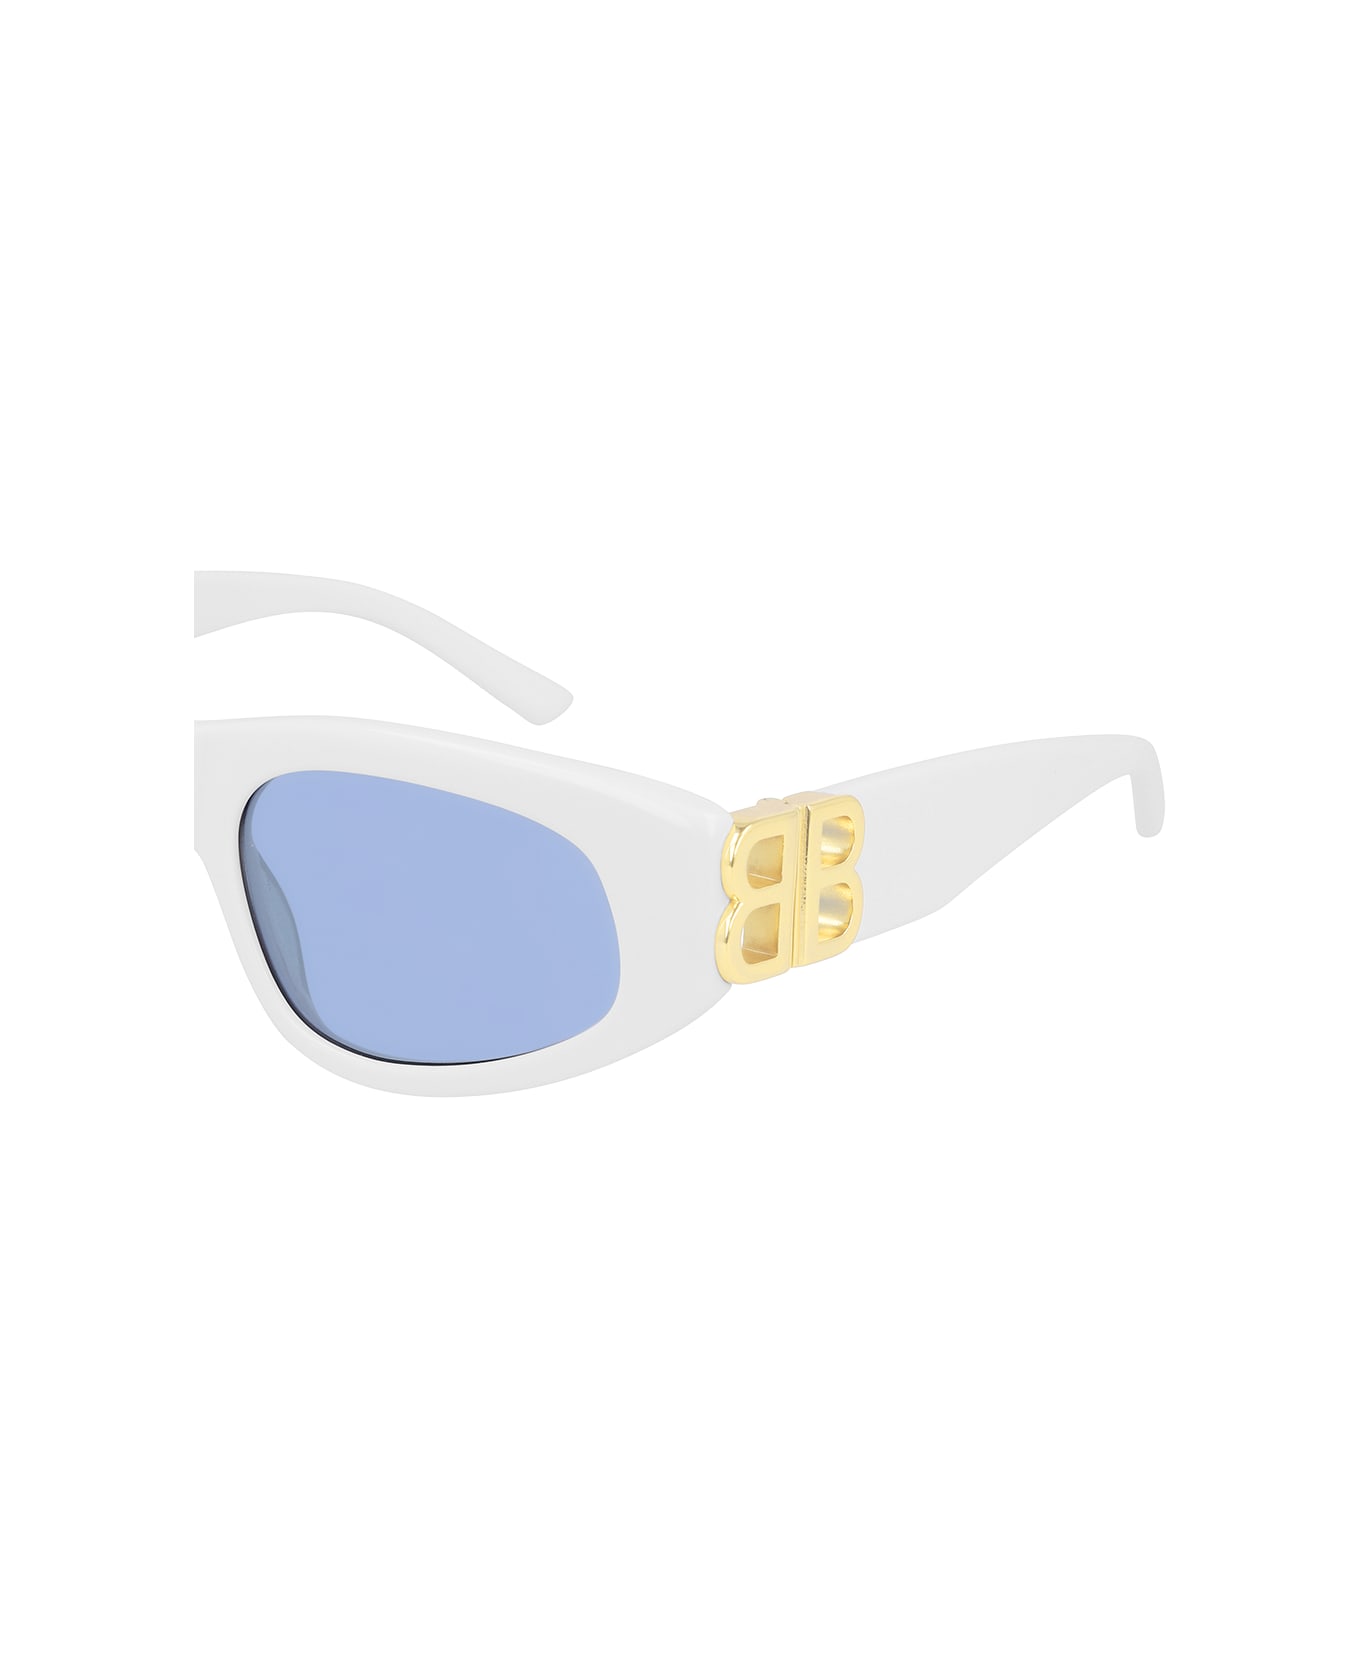 Balenciaga Eyewear BB0095S Sunglasses - White Gold Light Blue